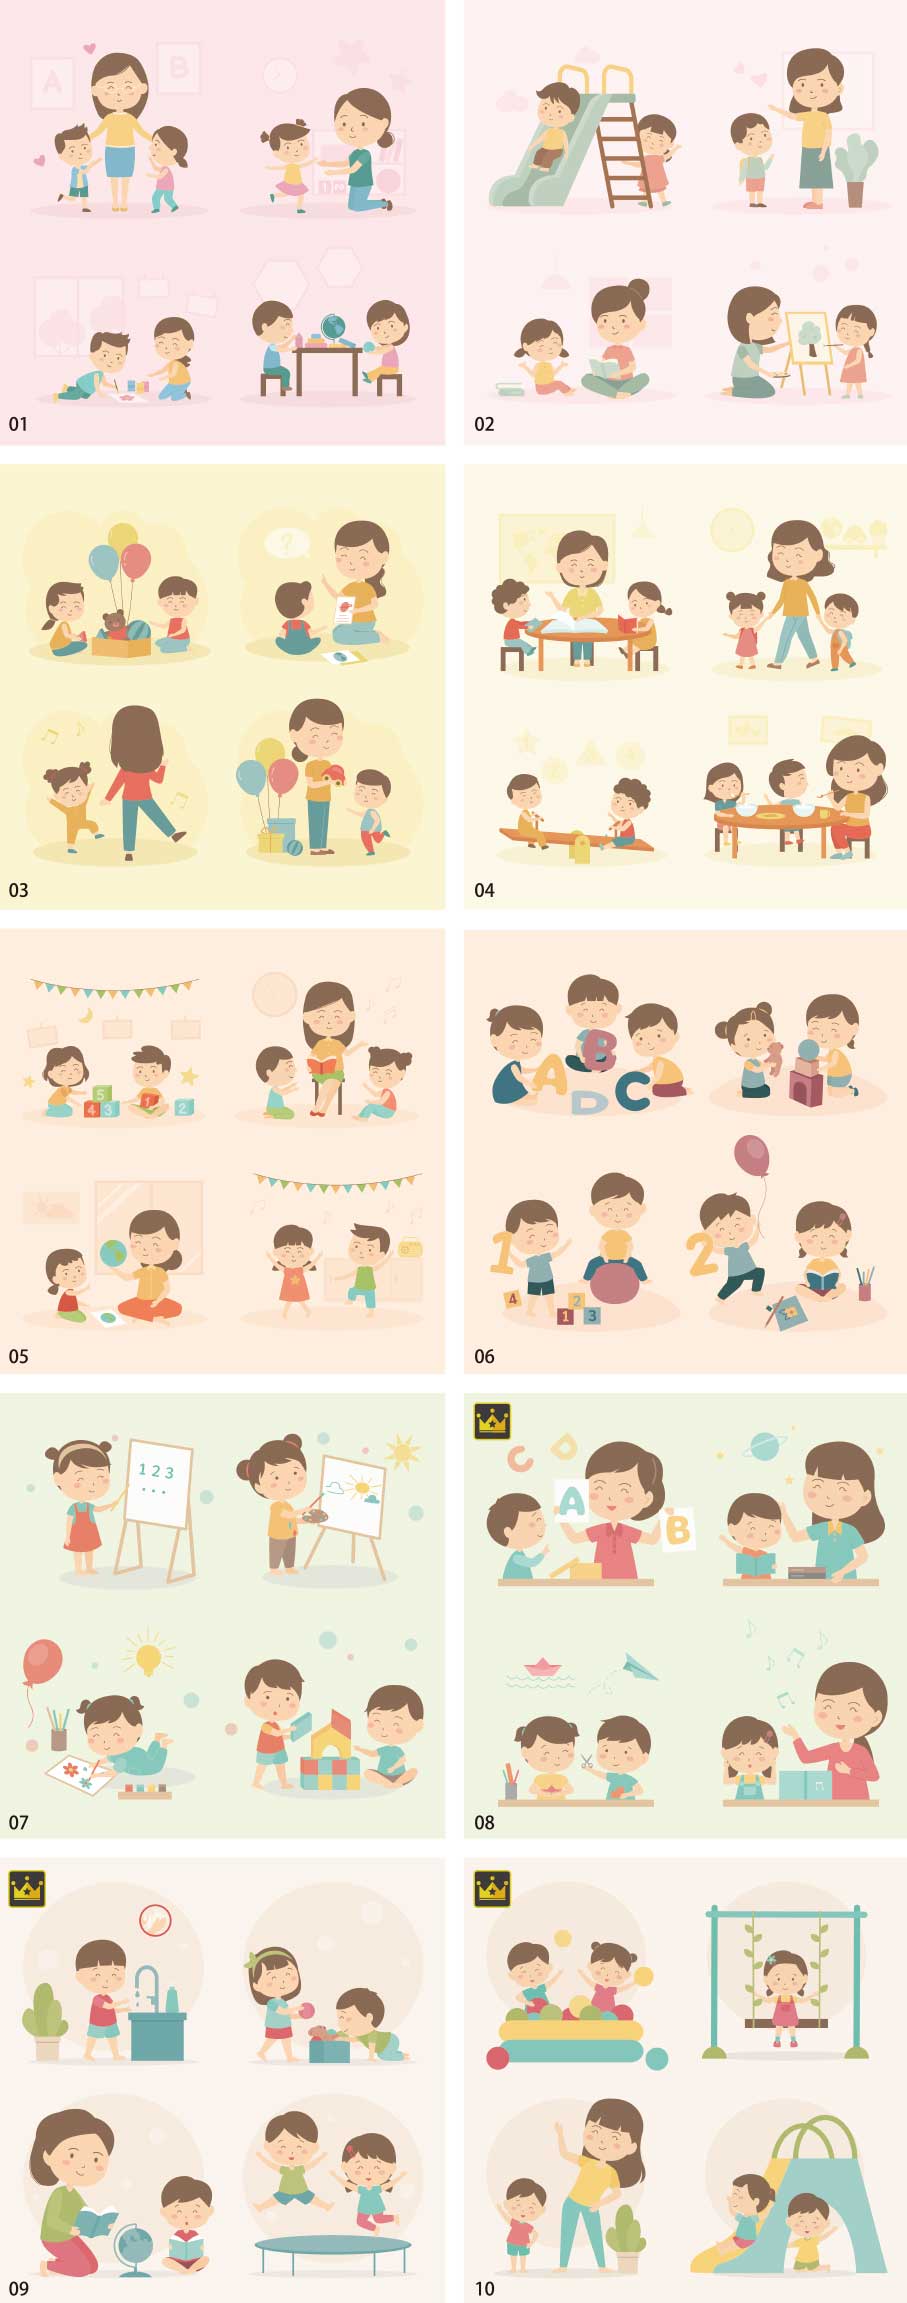 Kindergarten illustration collection